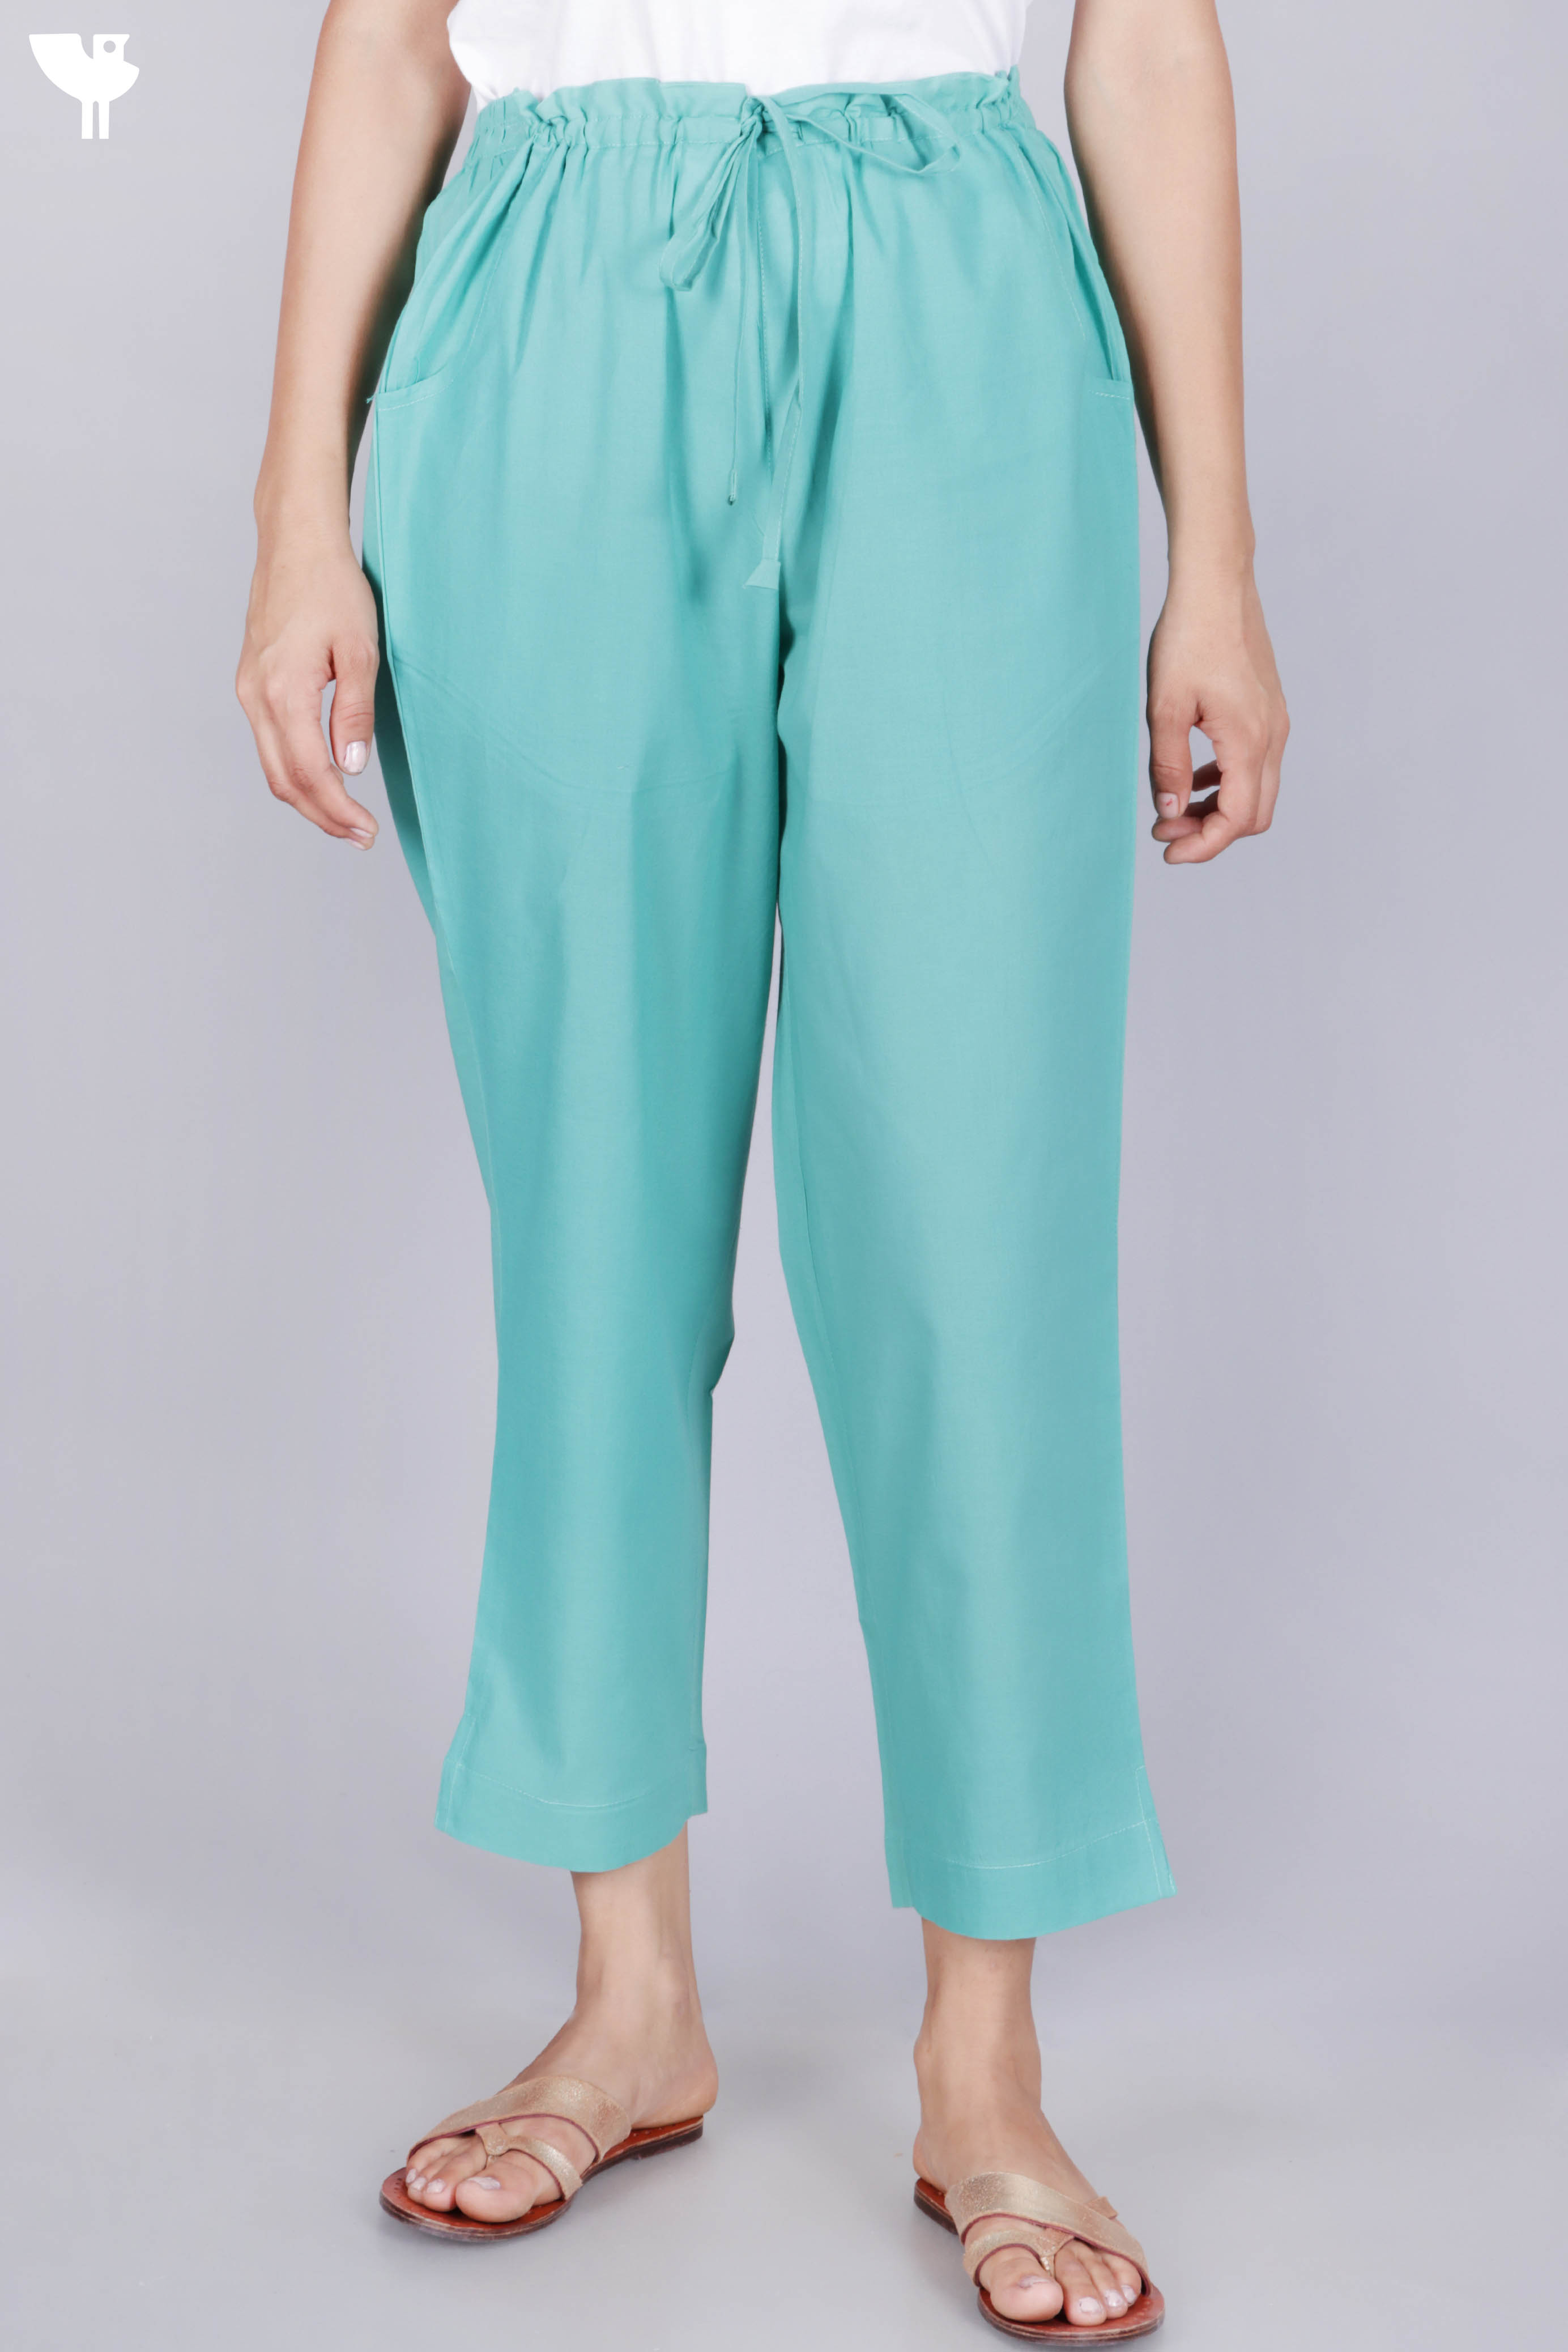 Dark Green Ladies Cotton Lycra Cigarette Pants at Rs 210/piece | सिगरेट  पैंट in Surat | ID: 2850505792273